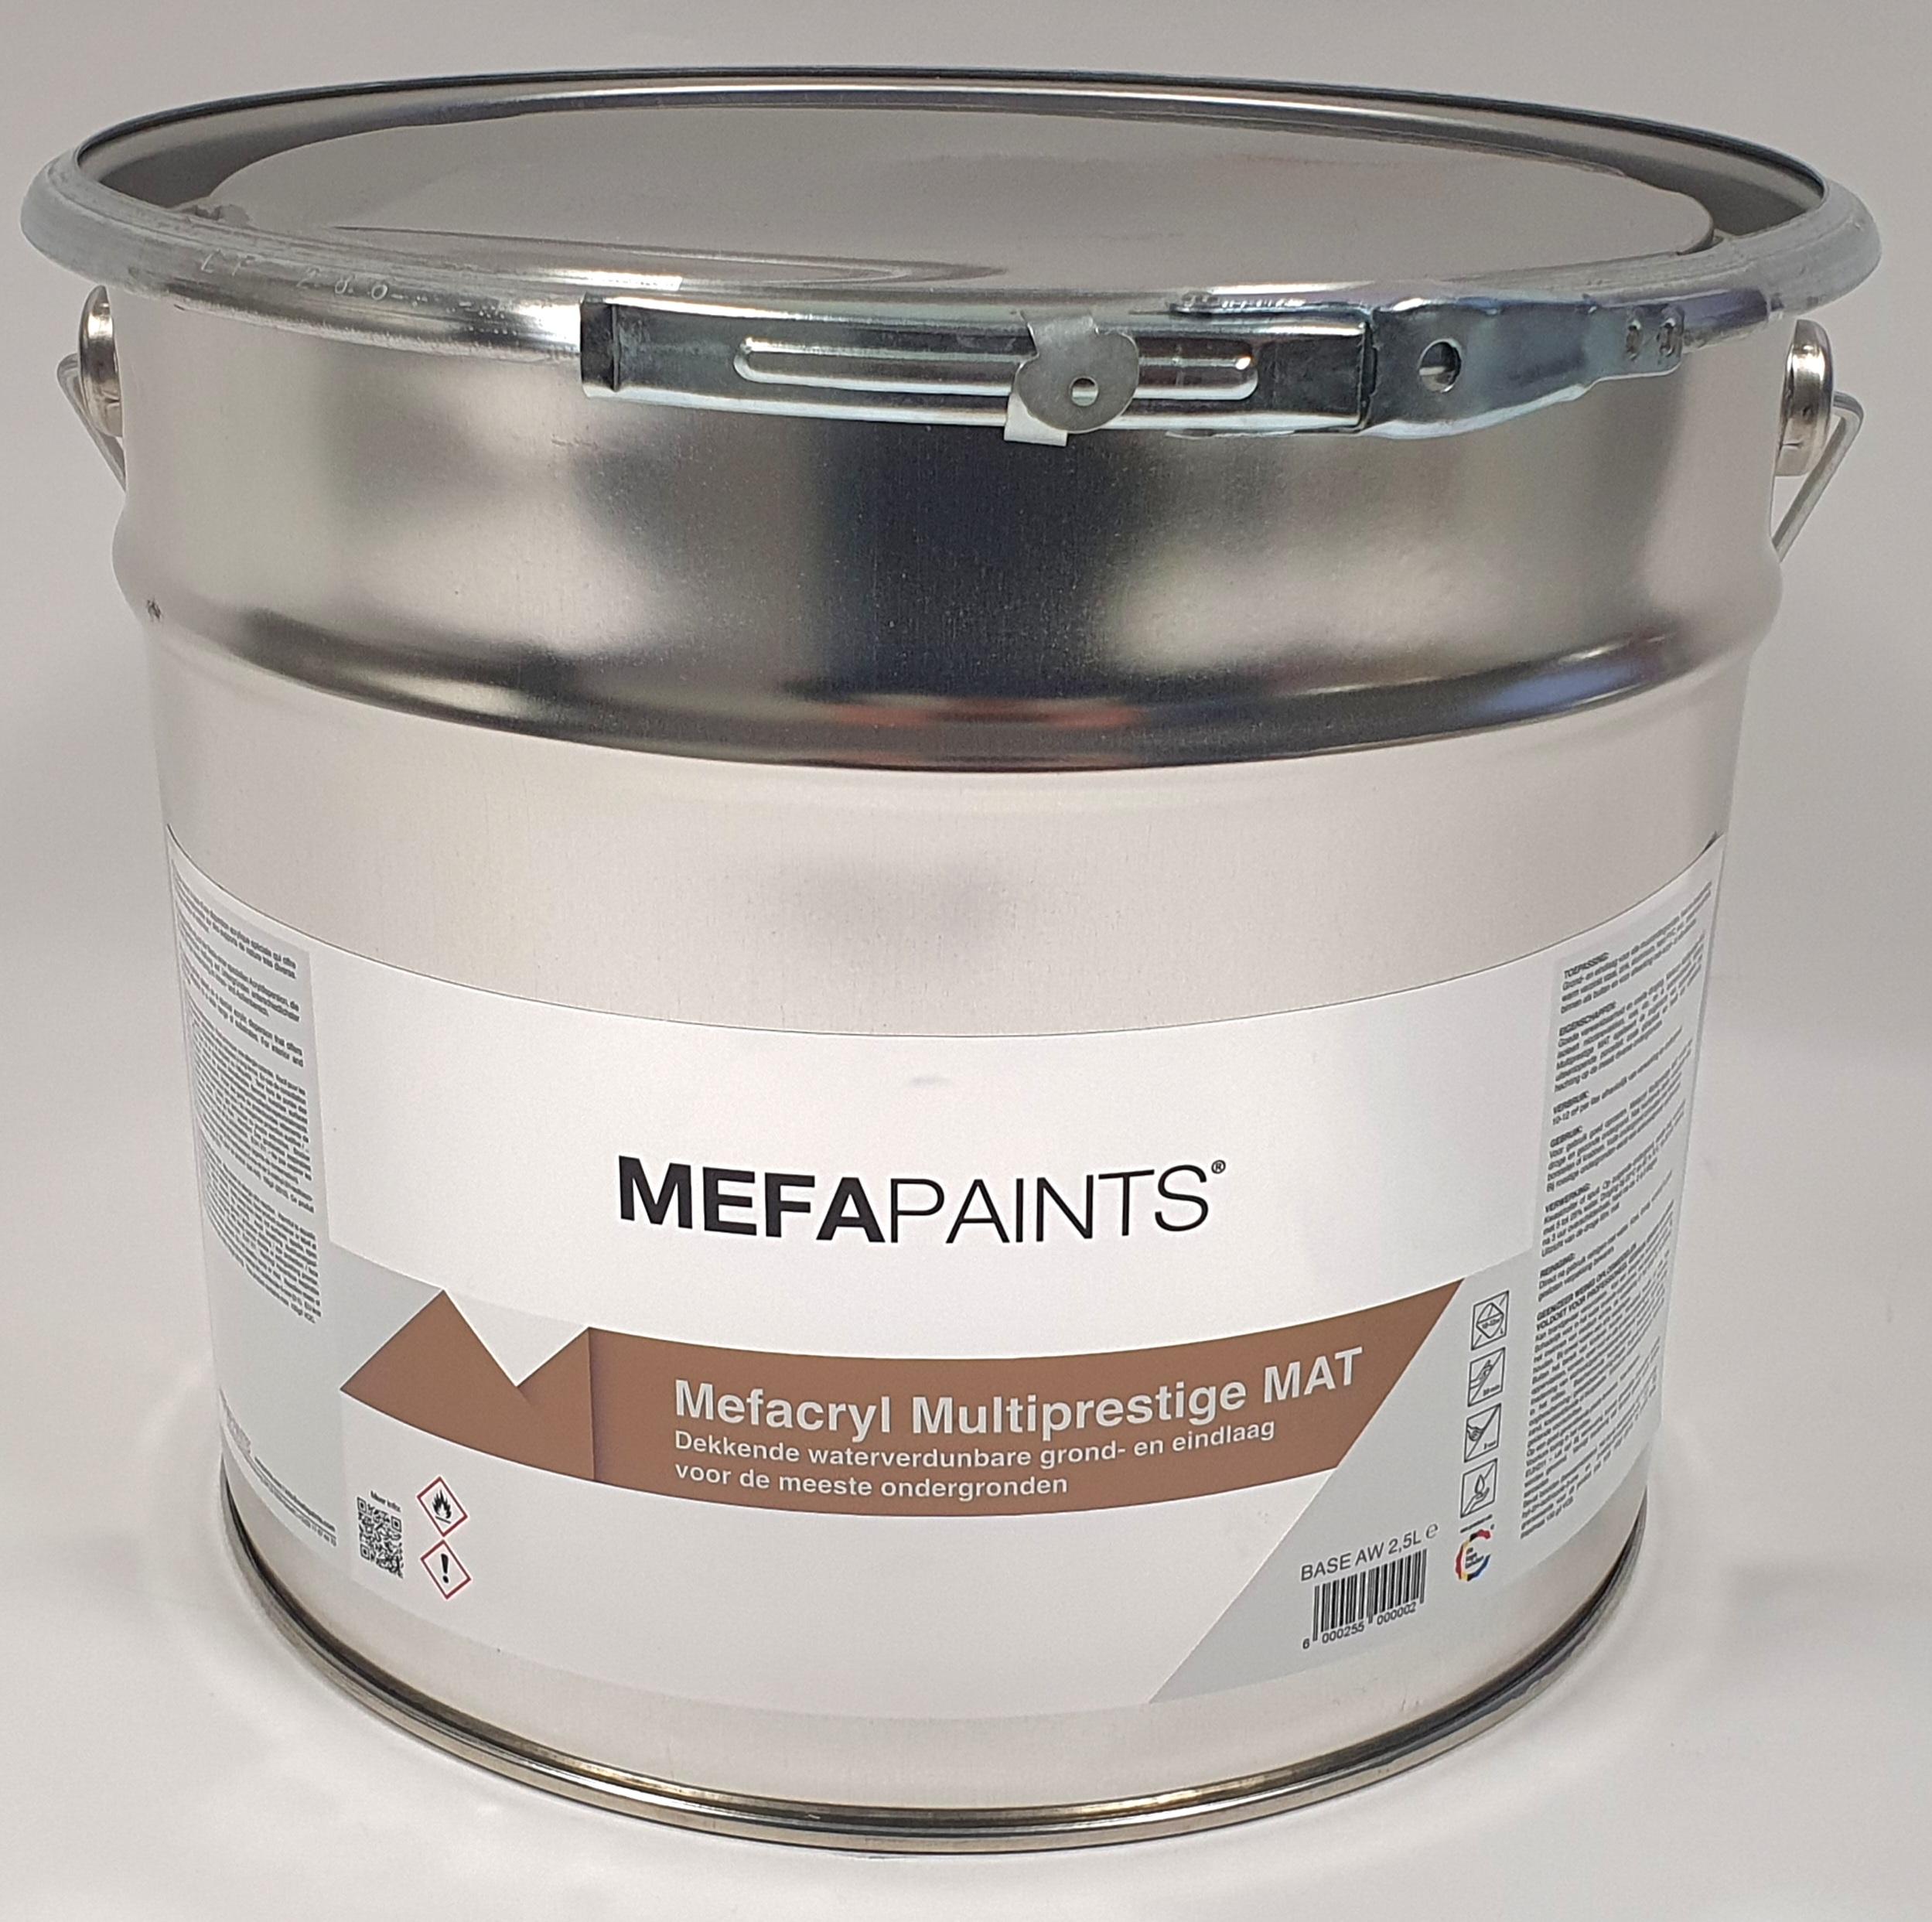 Mefapaints Multiprestige Mat resized